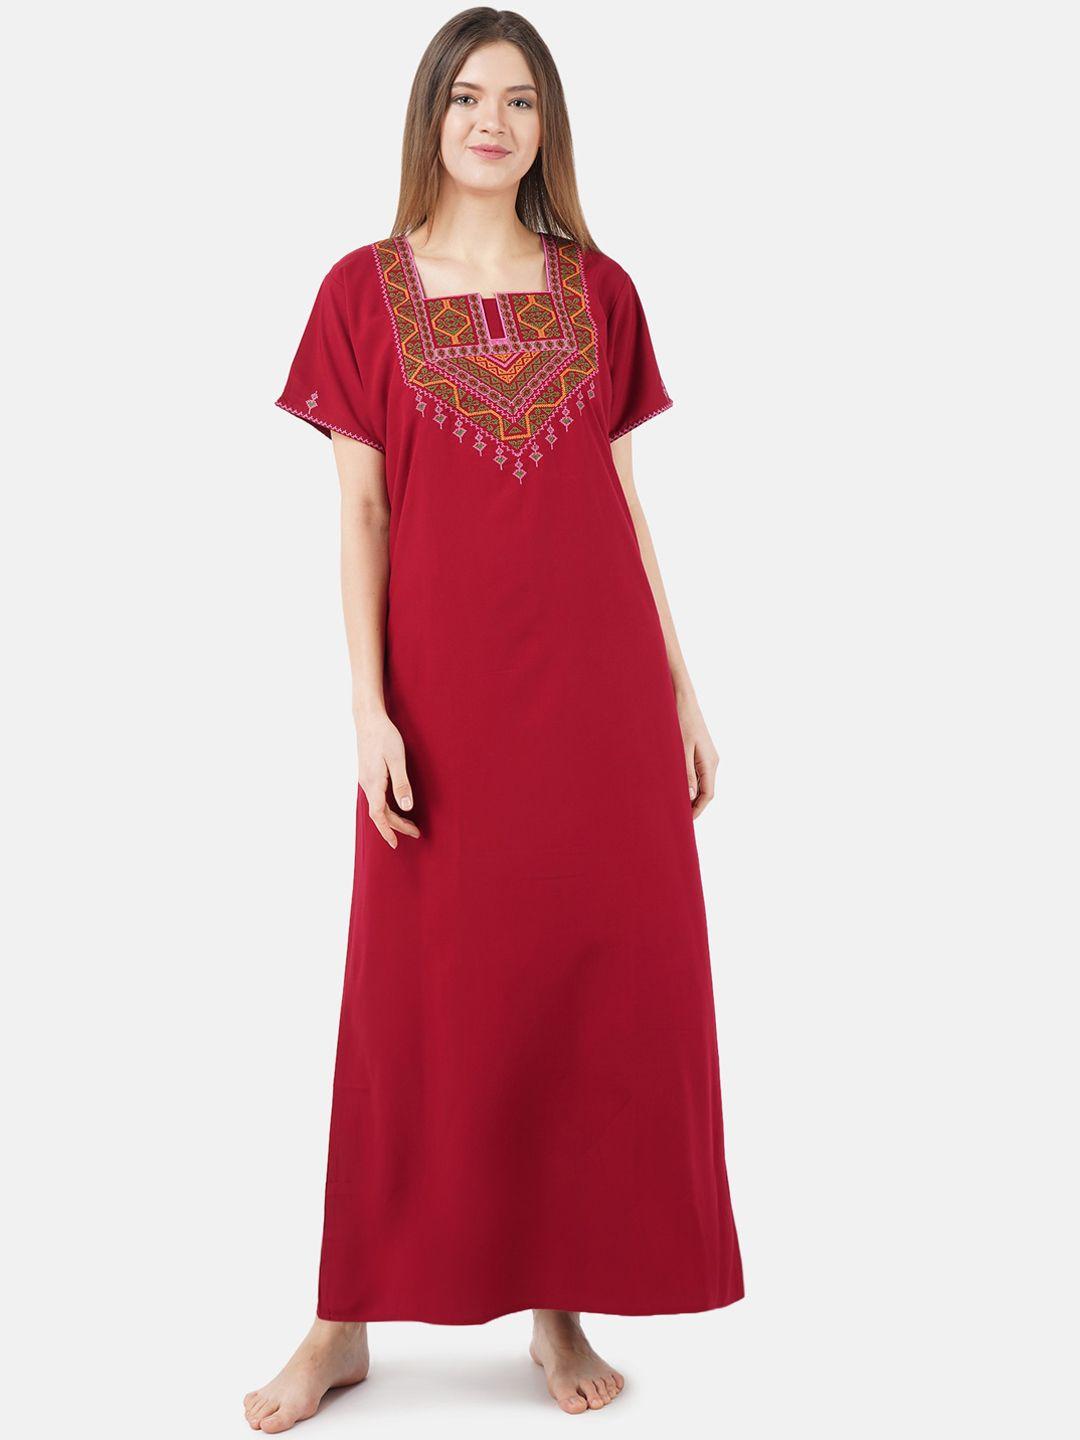 koi sleepwear maroon embroidered nightdress